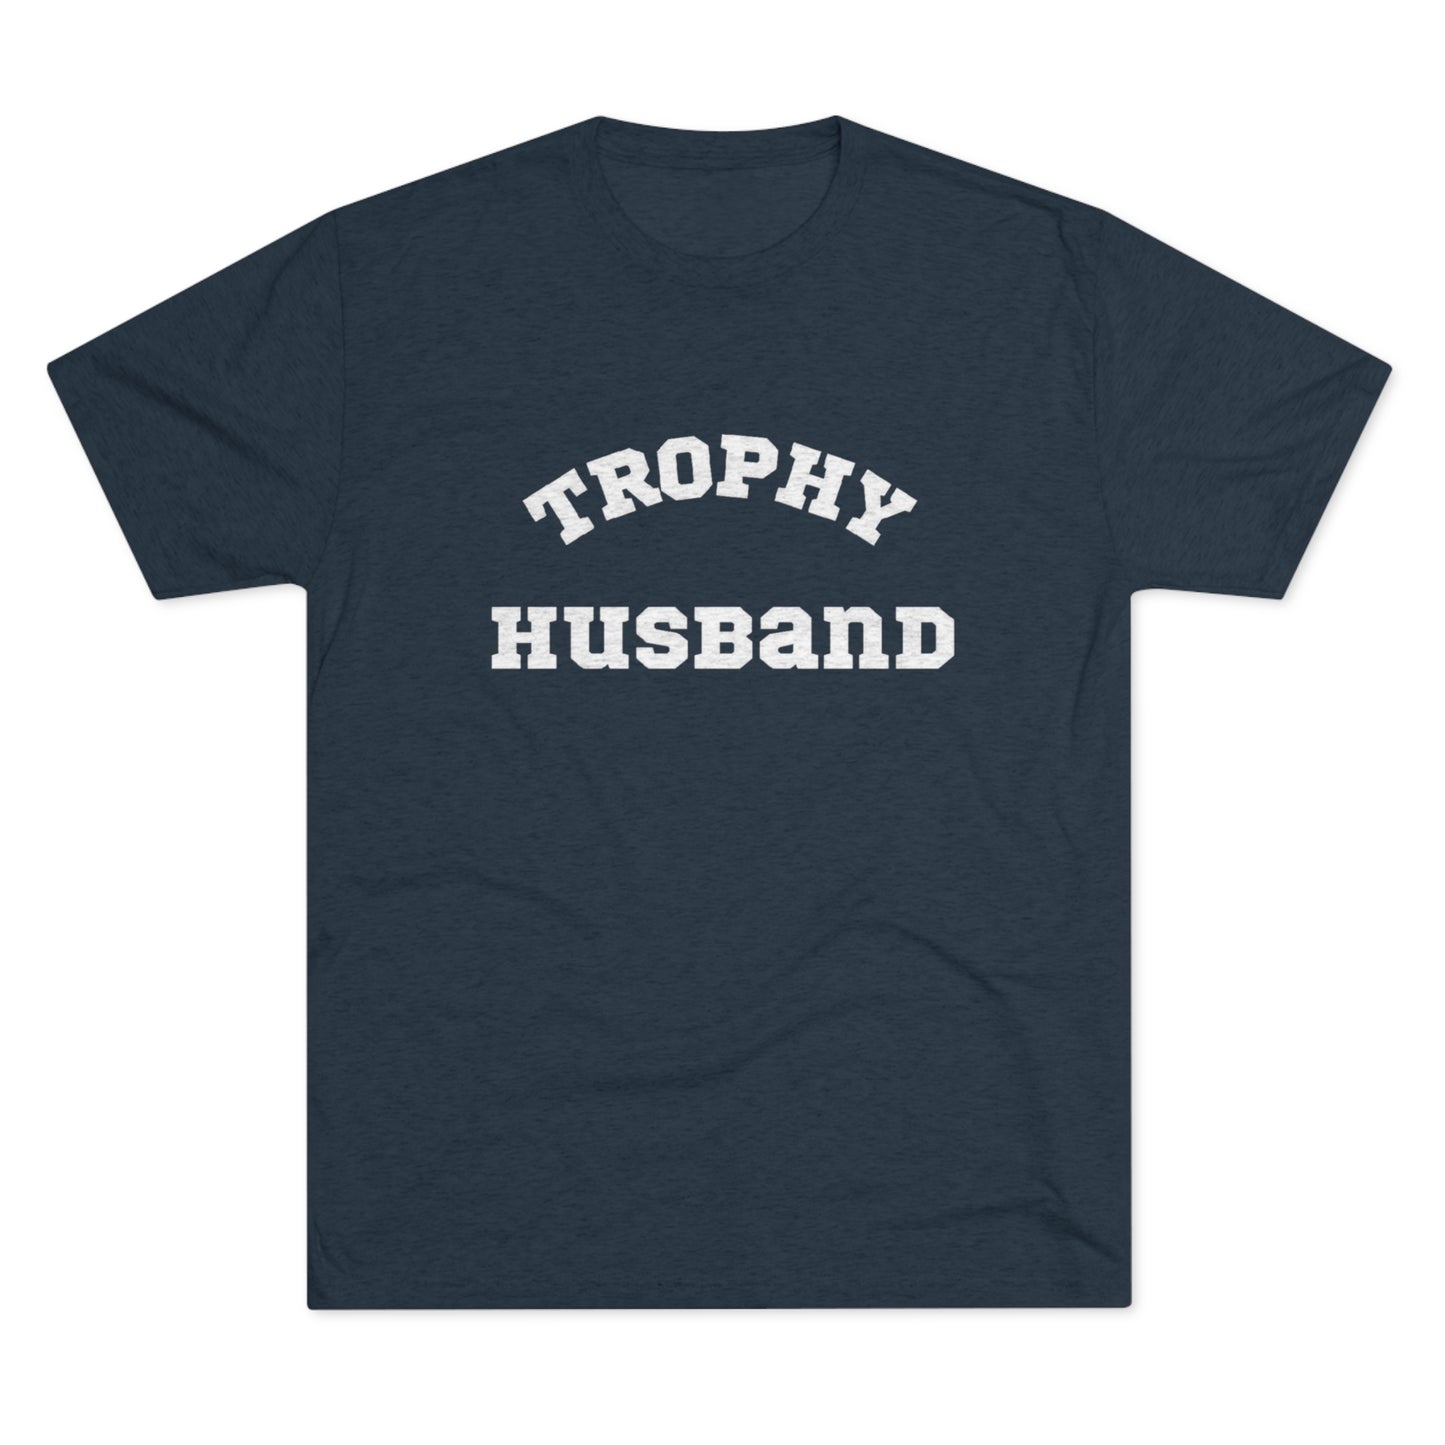 Trophy Husband Crew Tee